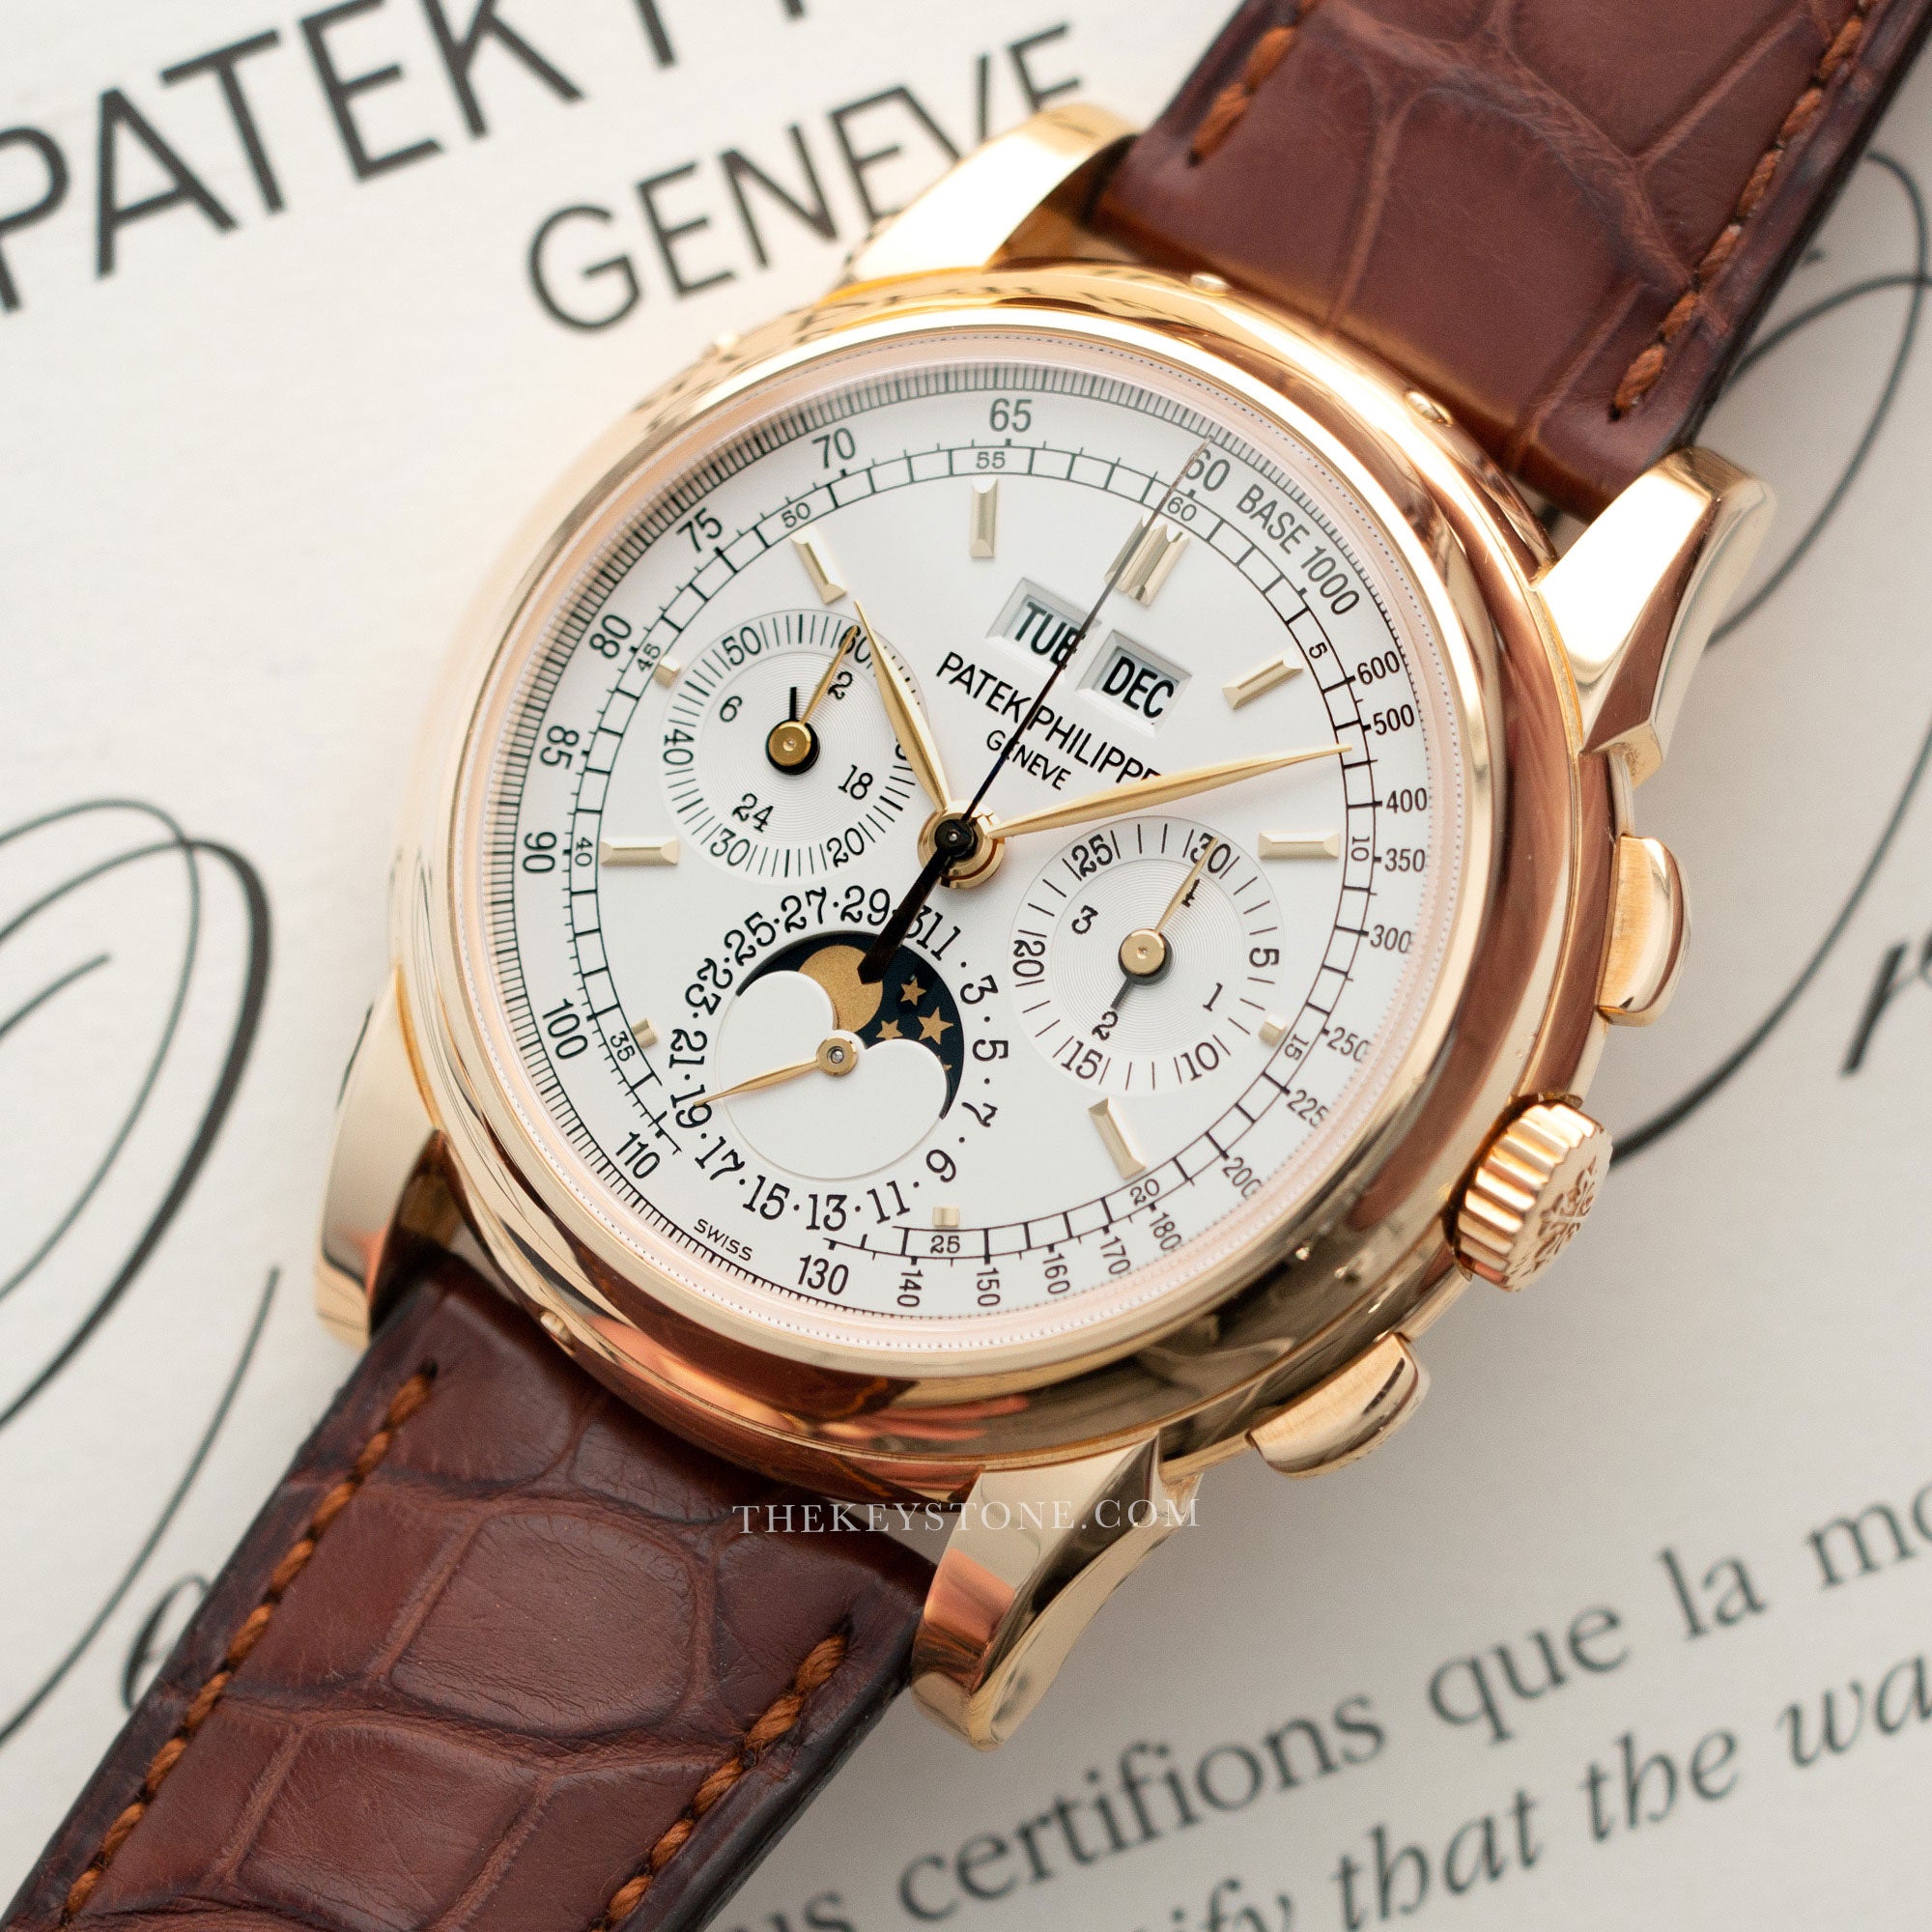 Patek Philippe - Patek Philippe Yellow Gold Perpetual Calendar Chronograph Watch Ref. 5970 - The Keystone Watches